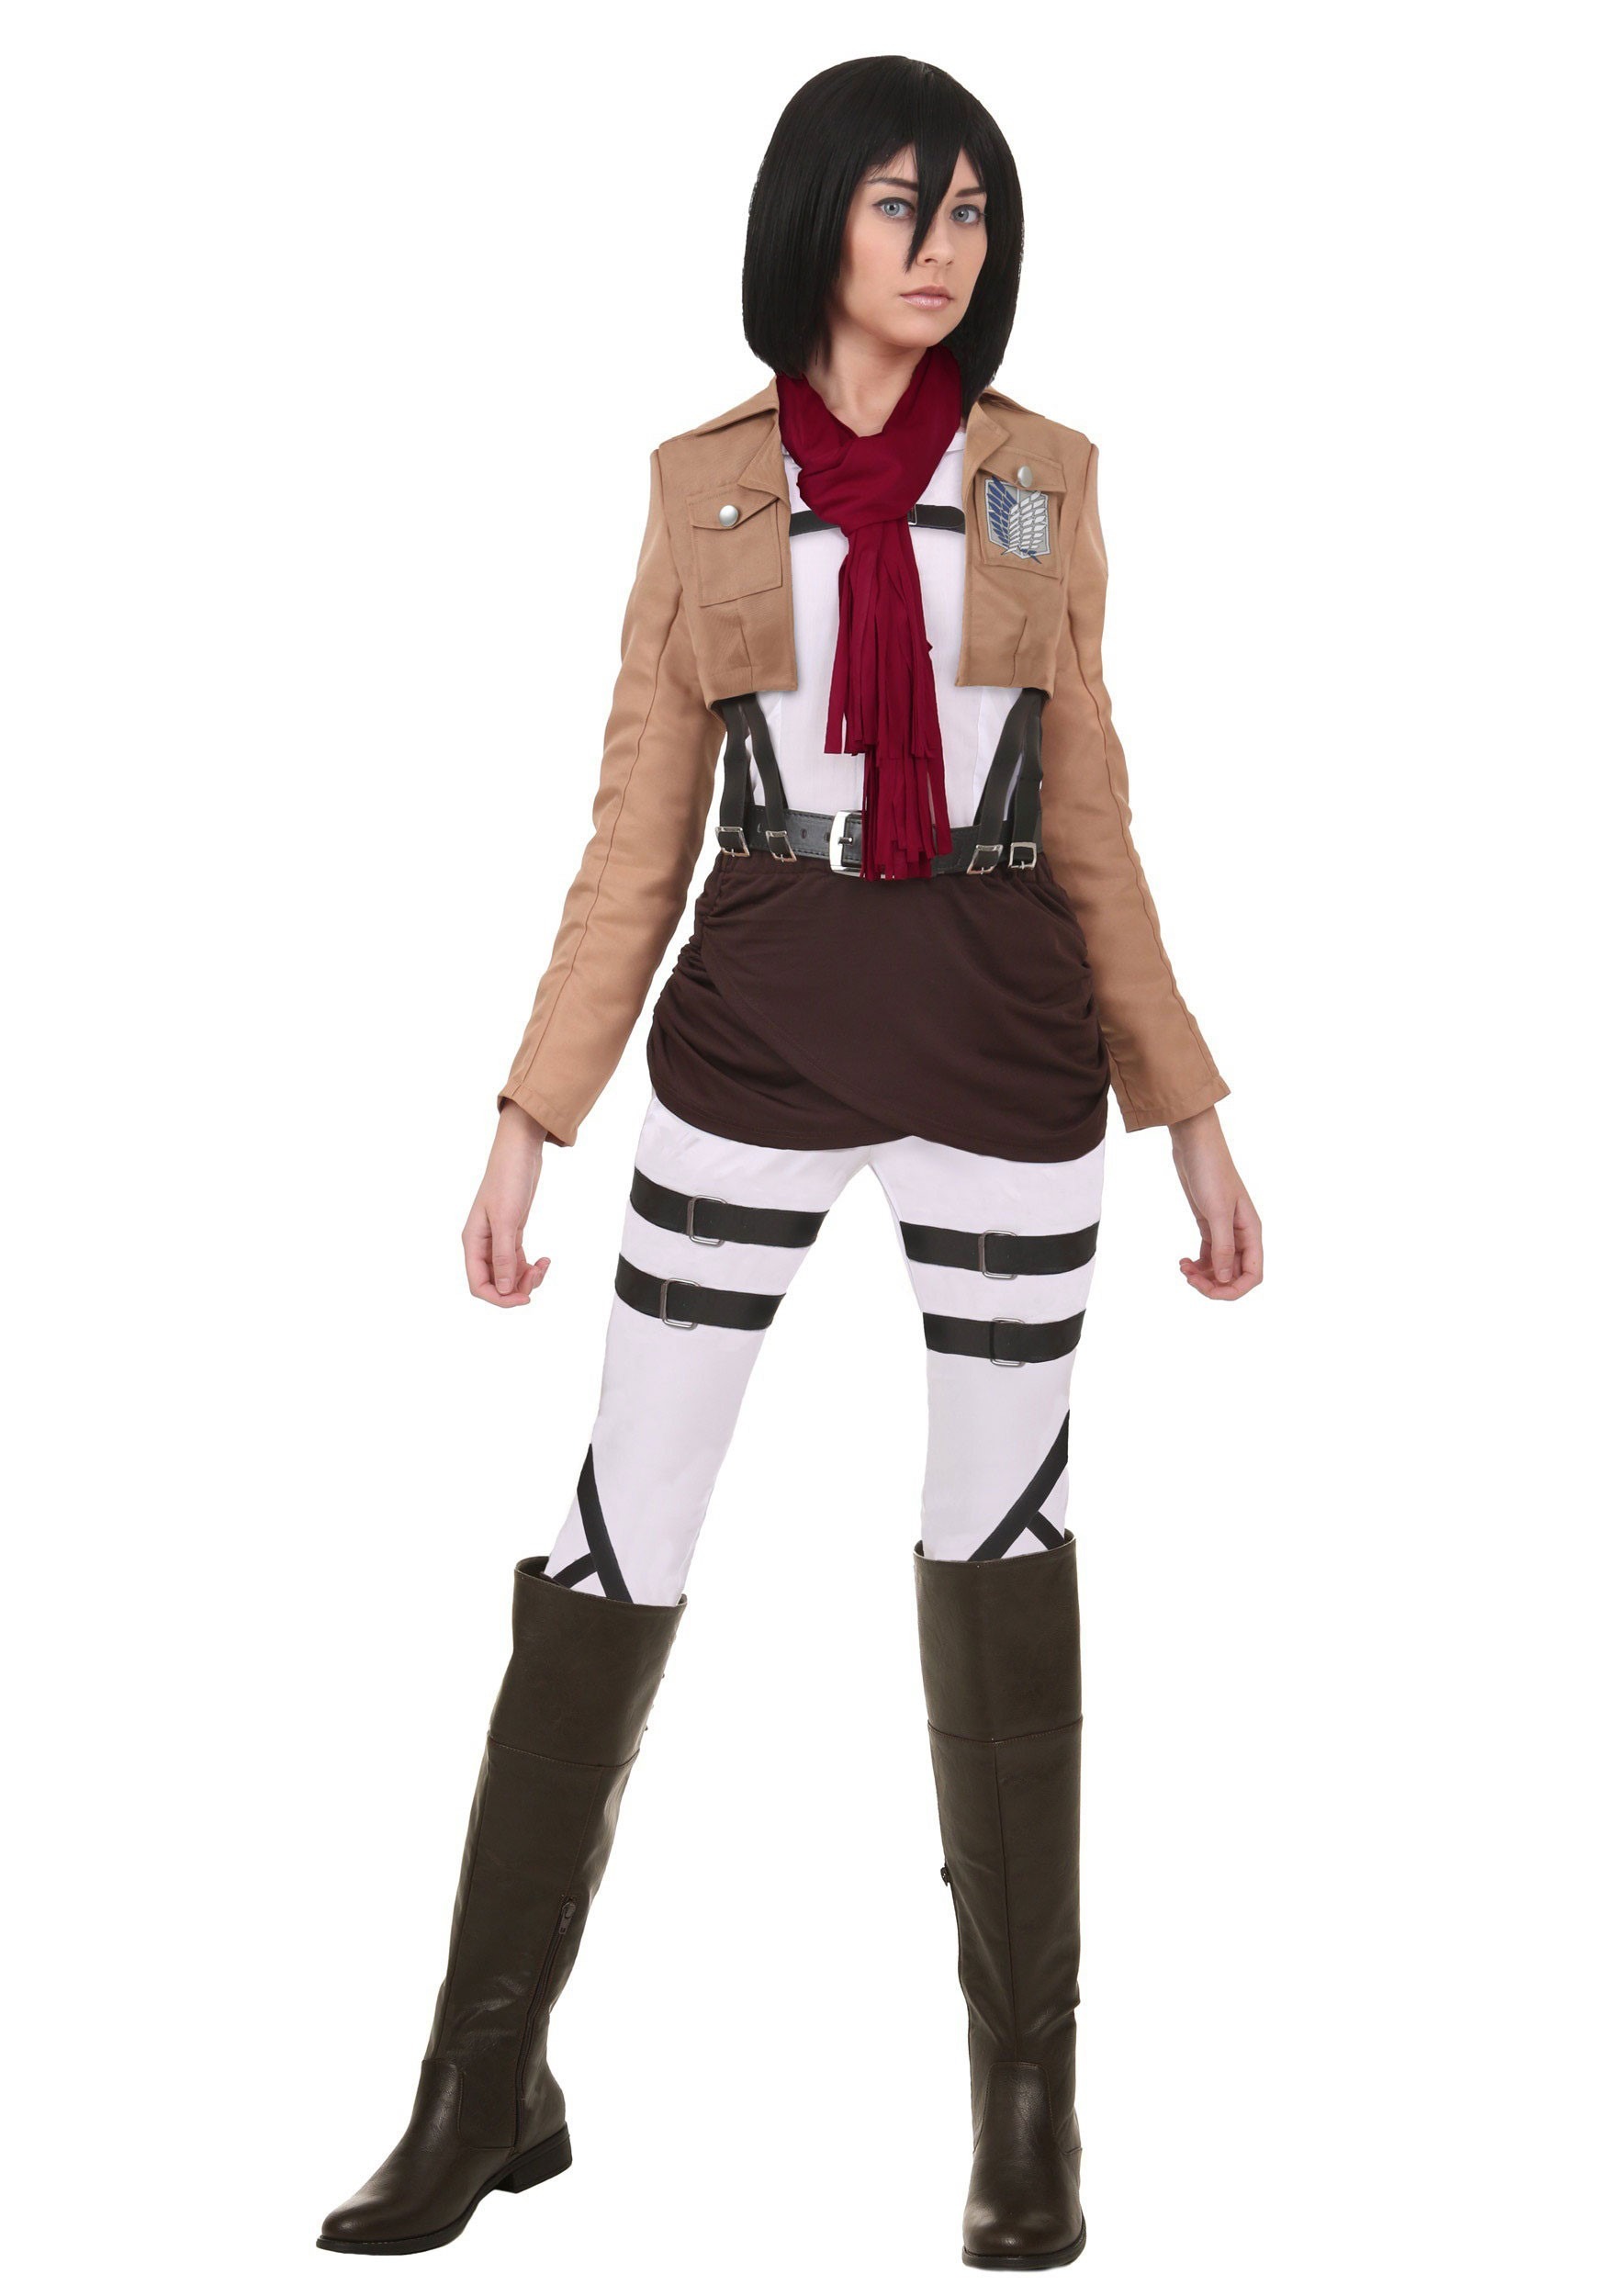 Image of Attack on Titan Mikasa Costume | Adult Anime Cosplay ID FUN2270AD-S